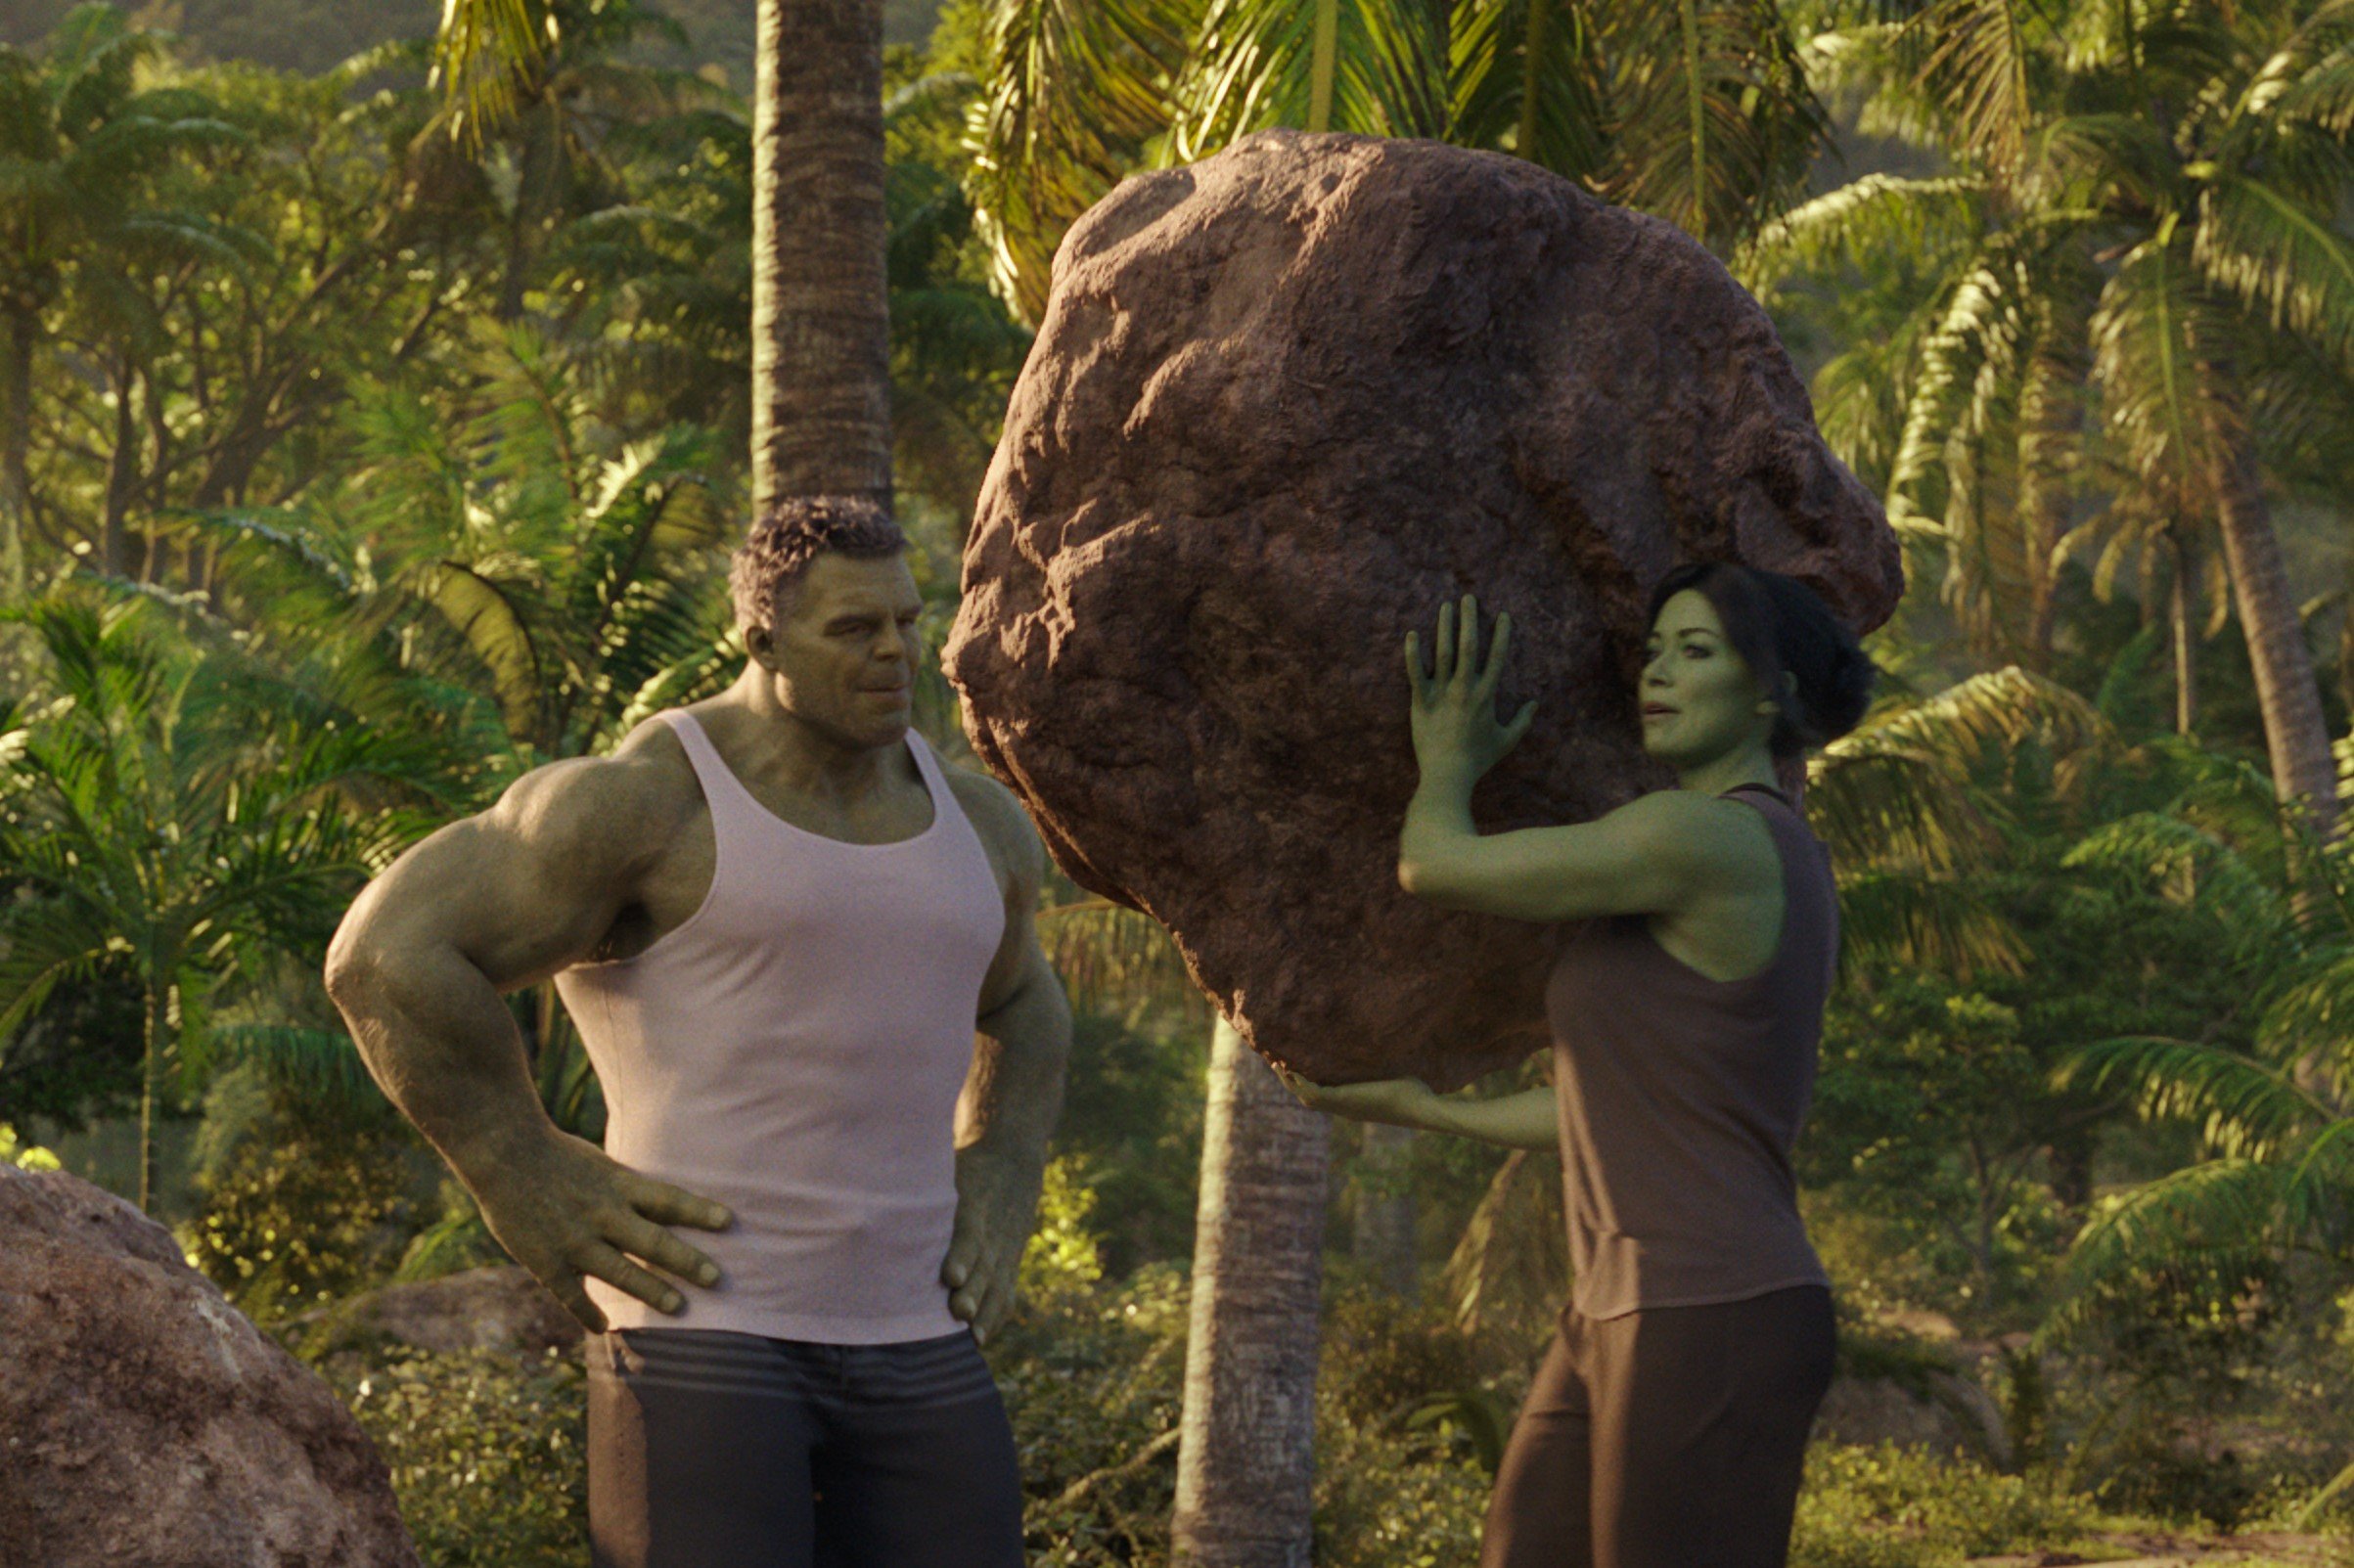 Mark Ruffalo as Bruce Banner/Hulk and Tatiana Maslany as Jennifer Walters/She-Hulk